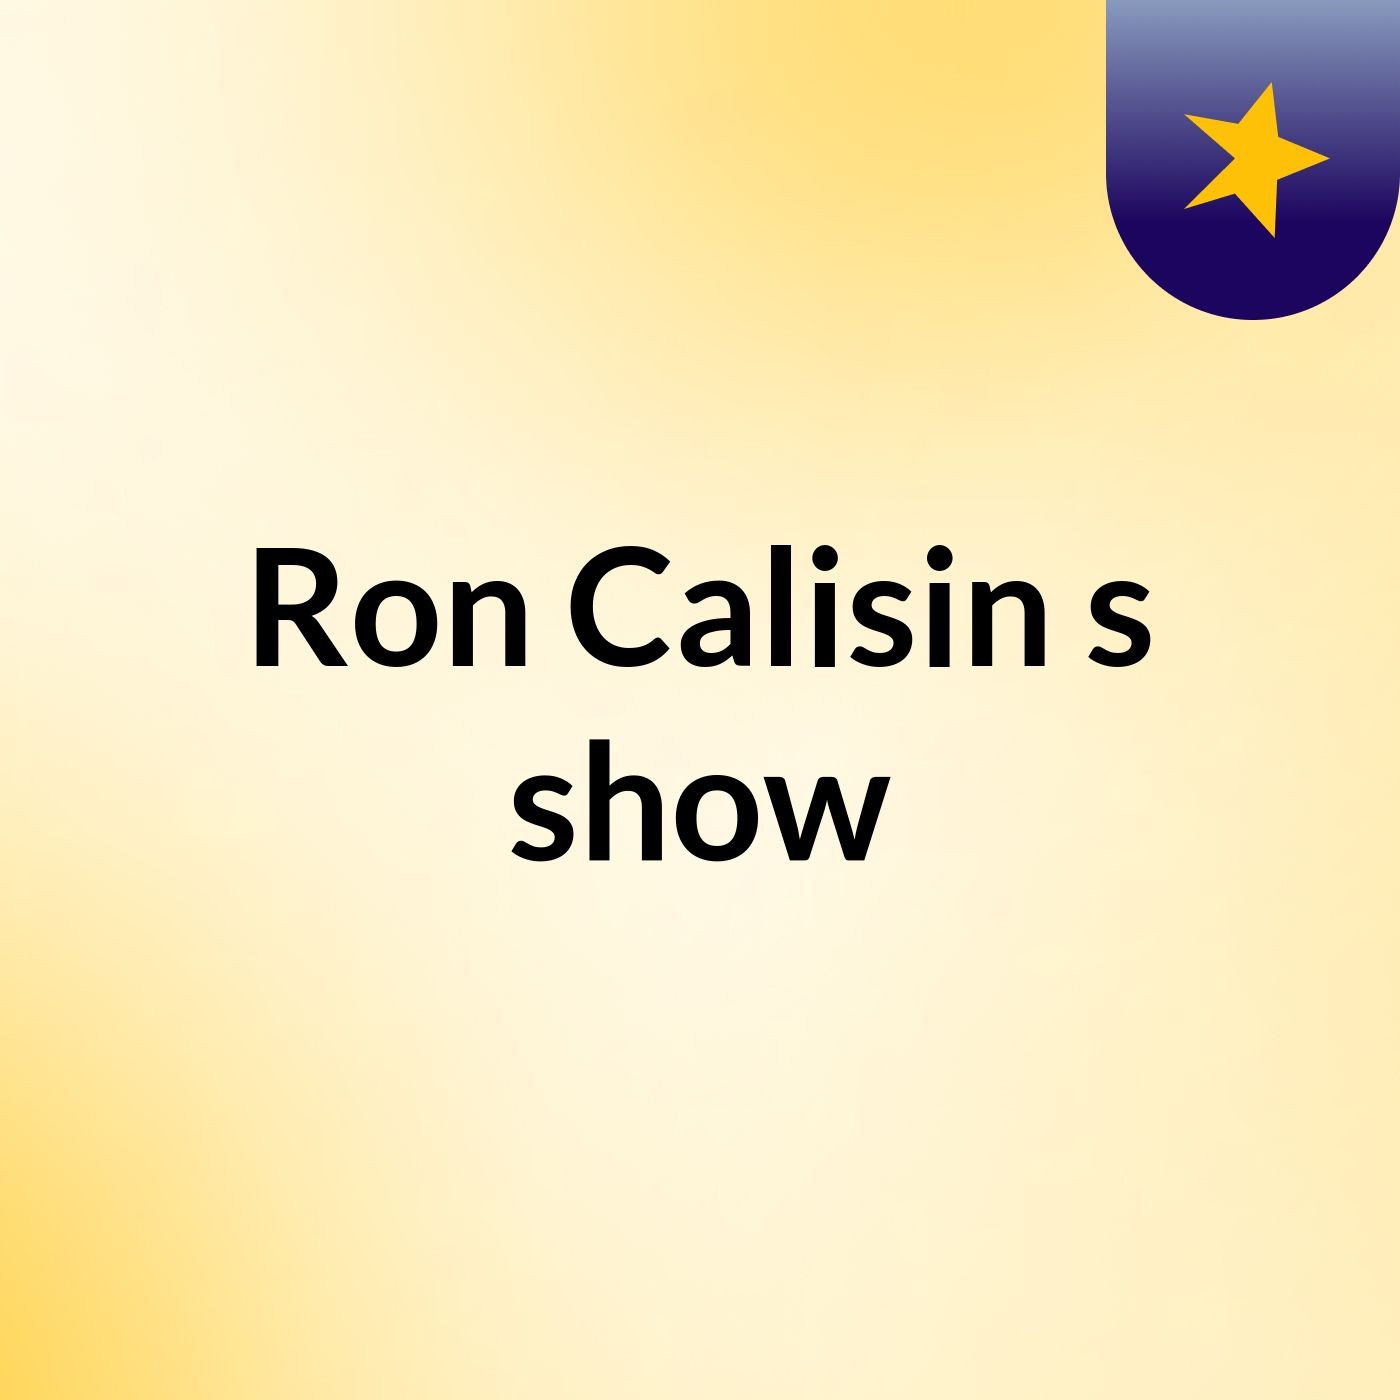 Ron Calisin's show